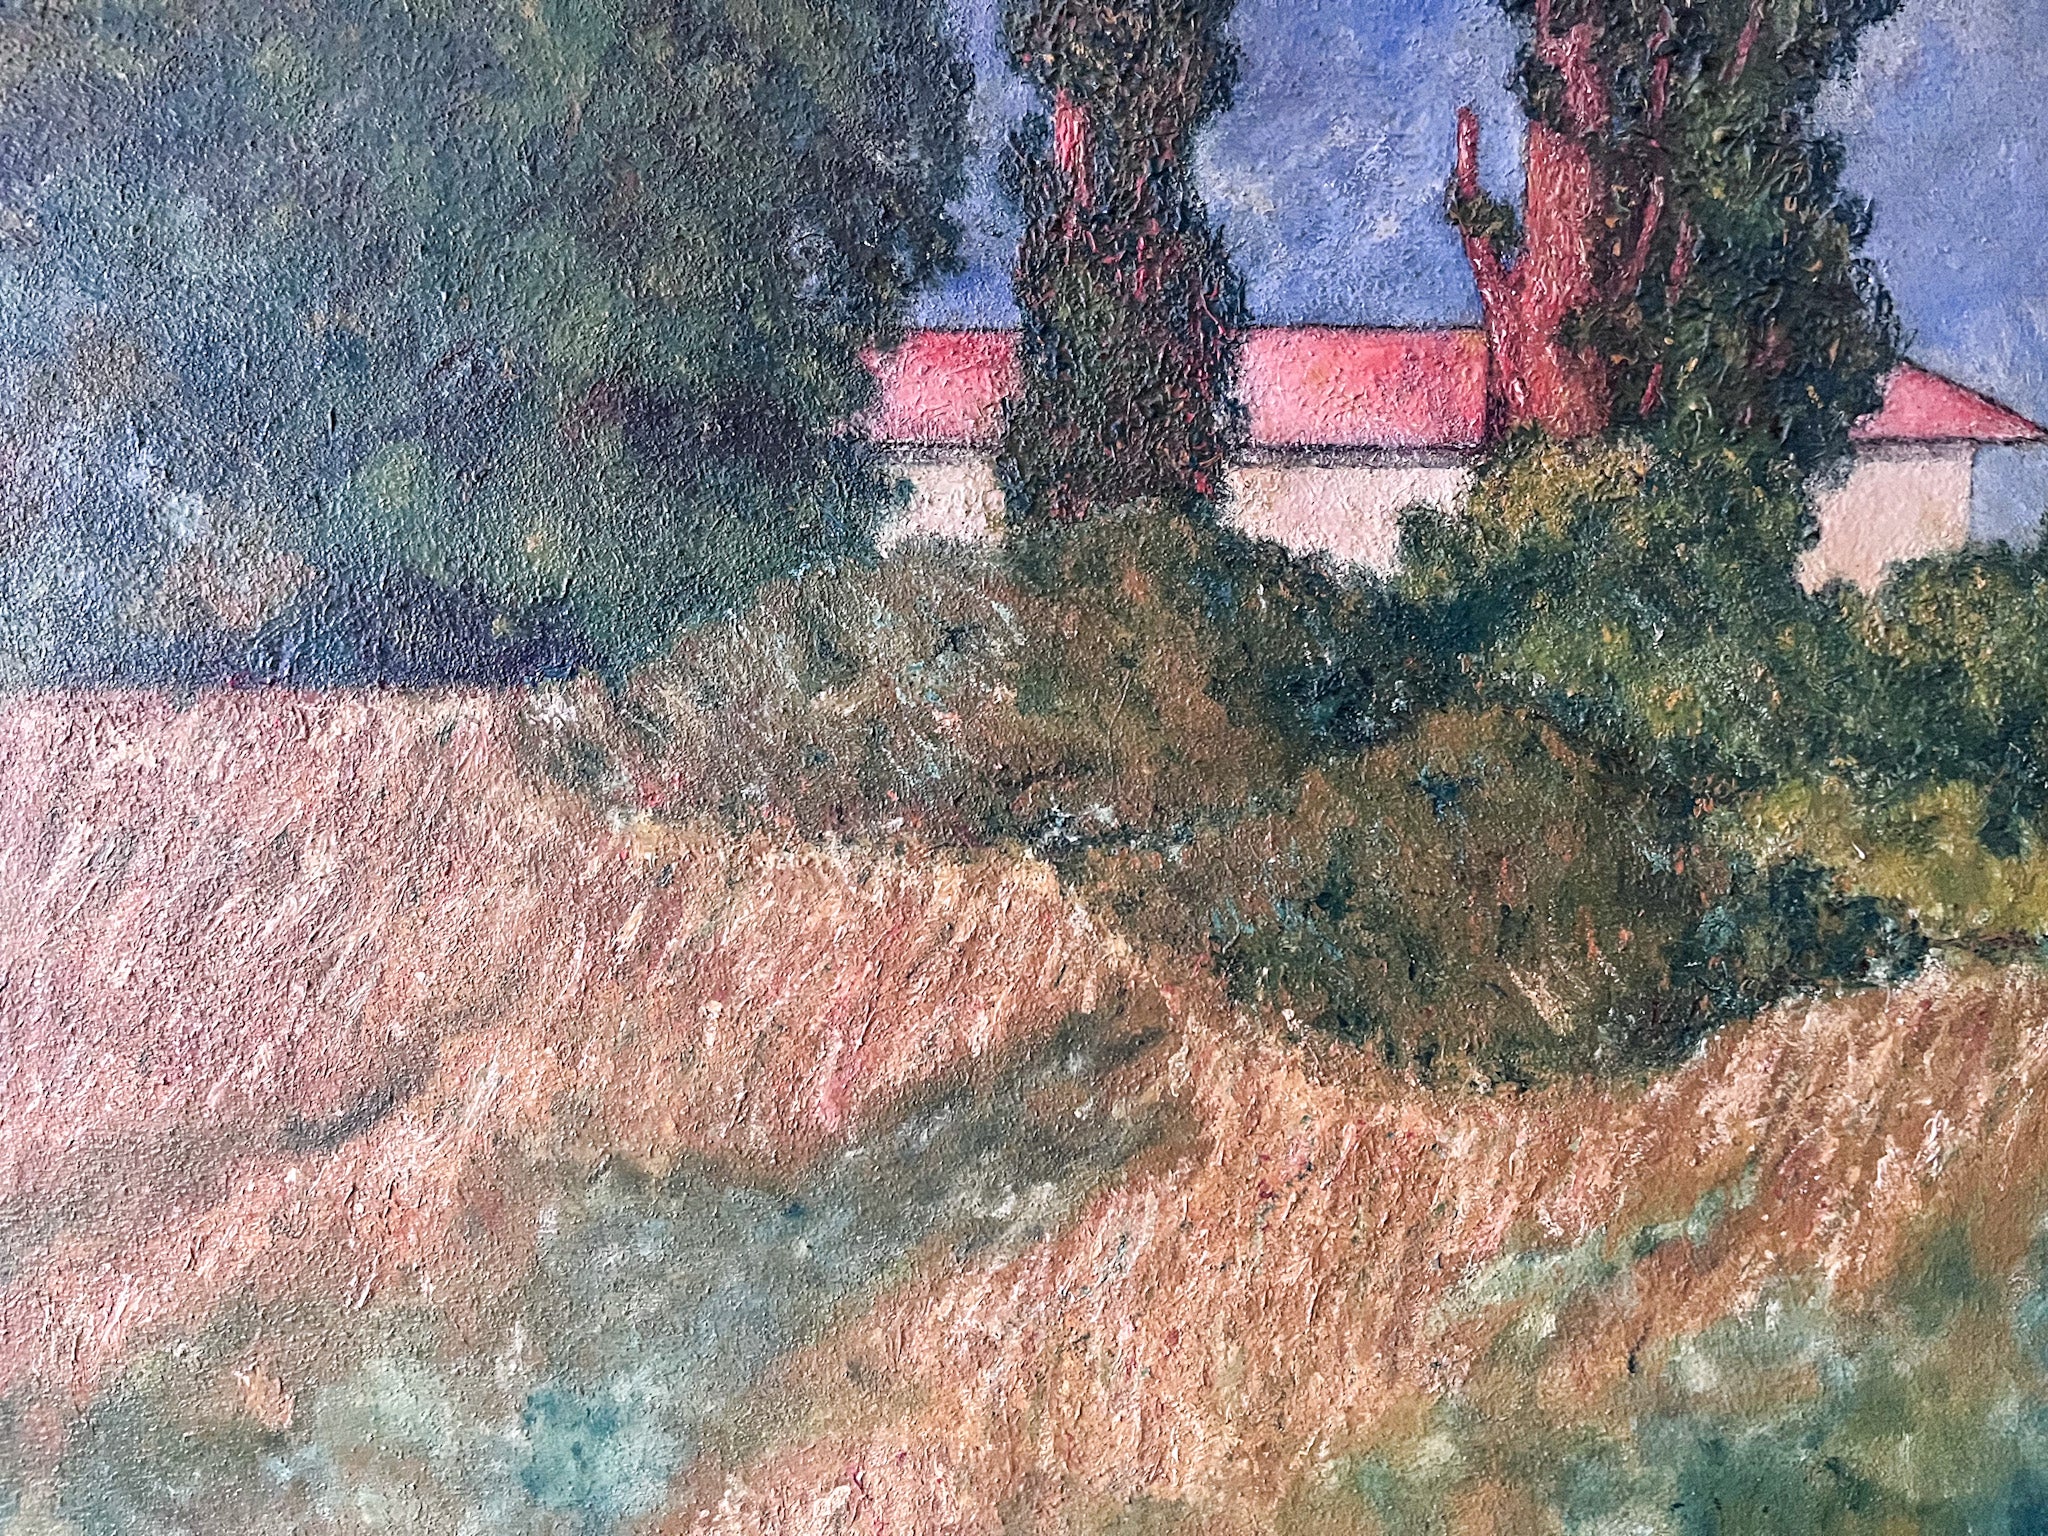 Swedish Oil On Canvas Painting, Impressionist Landscape, Signed